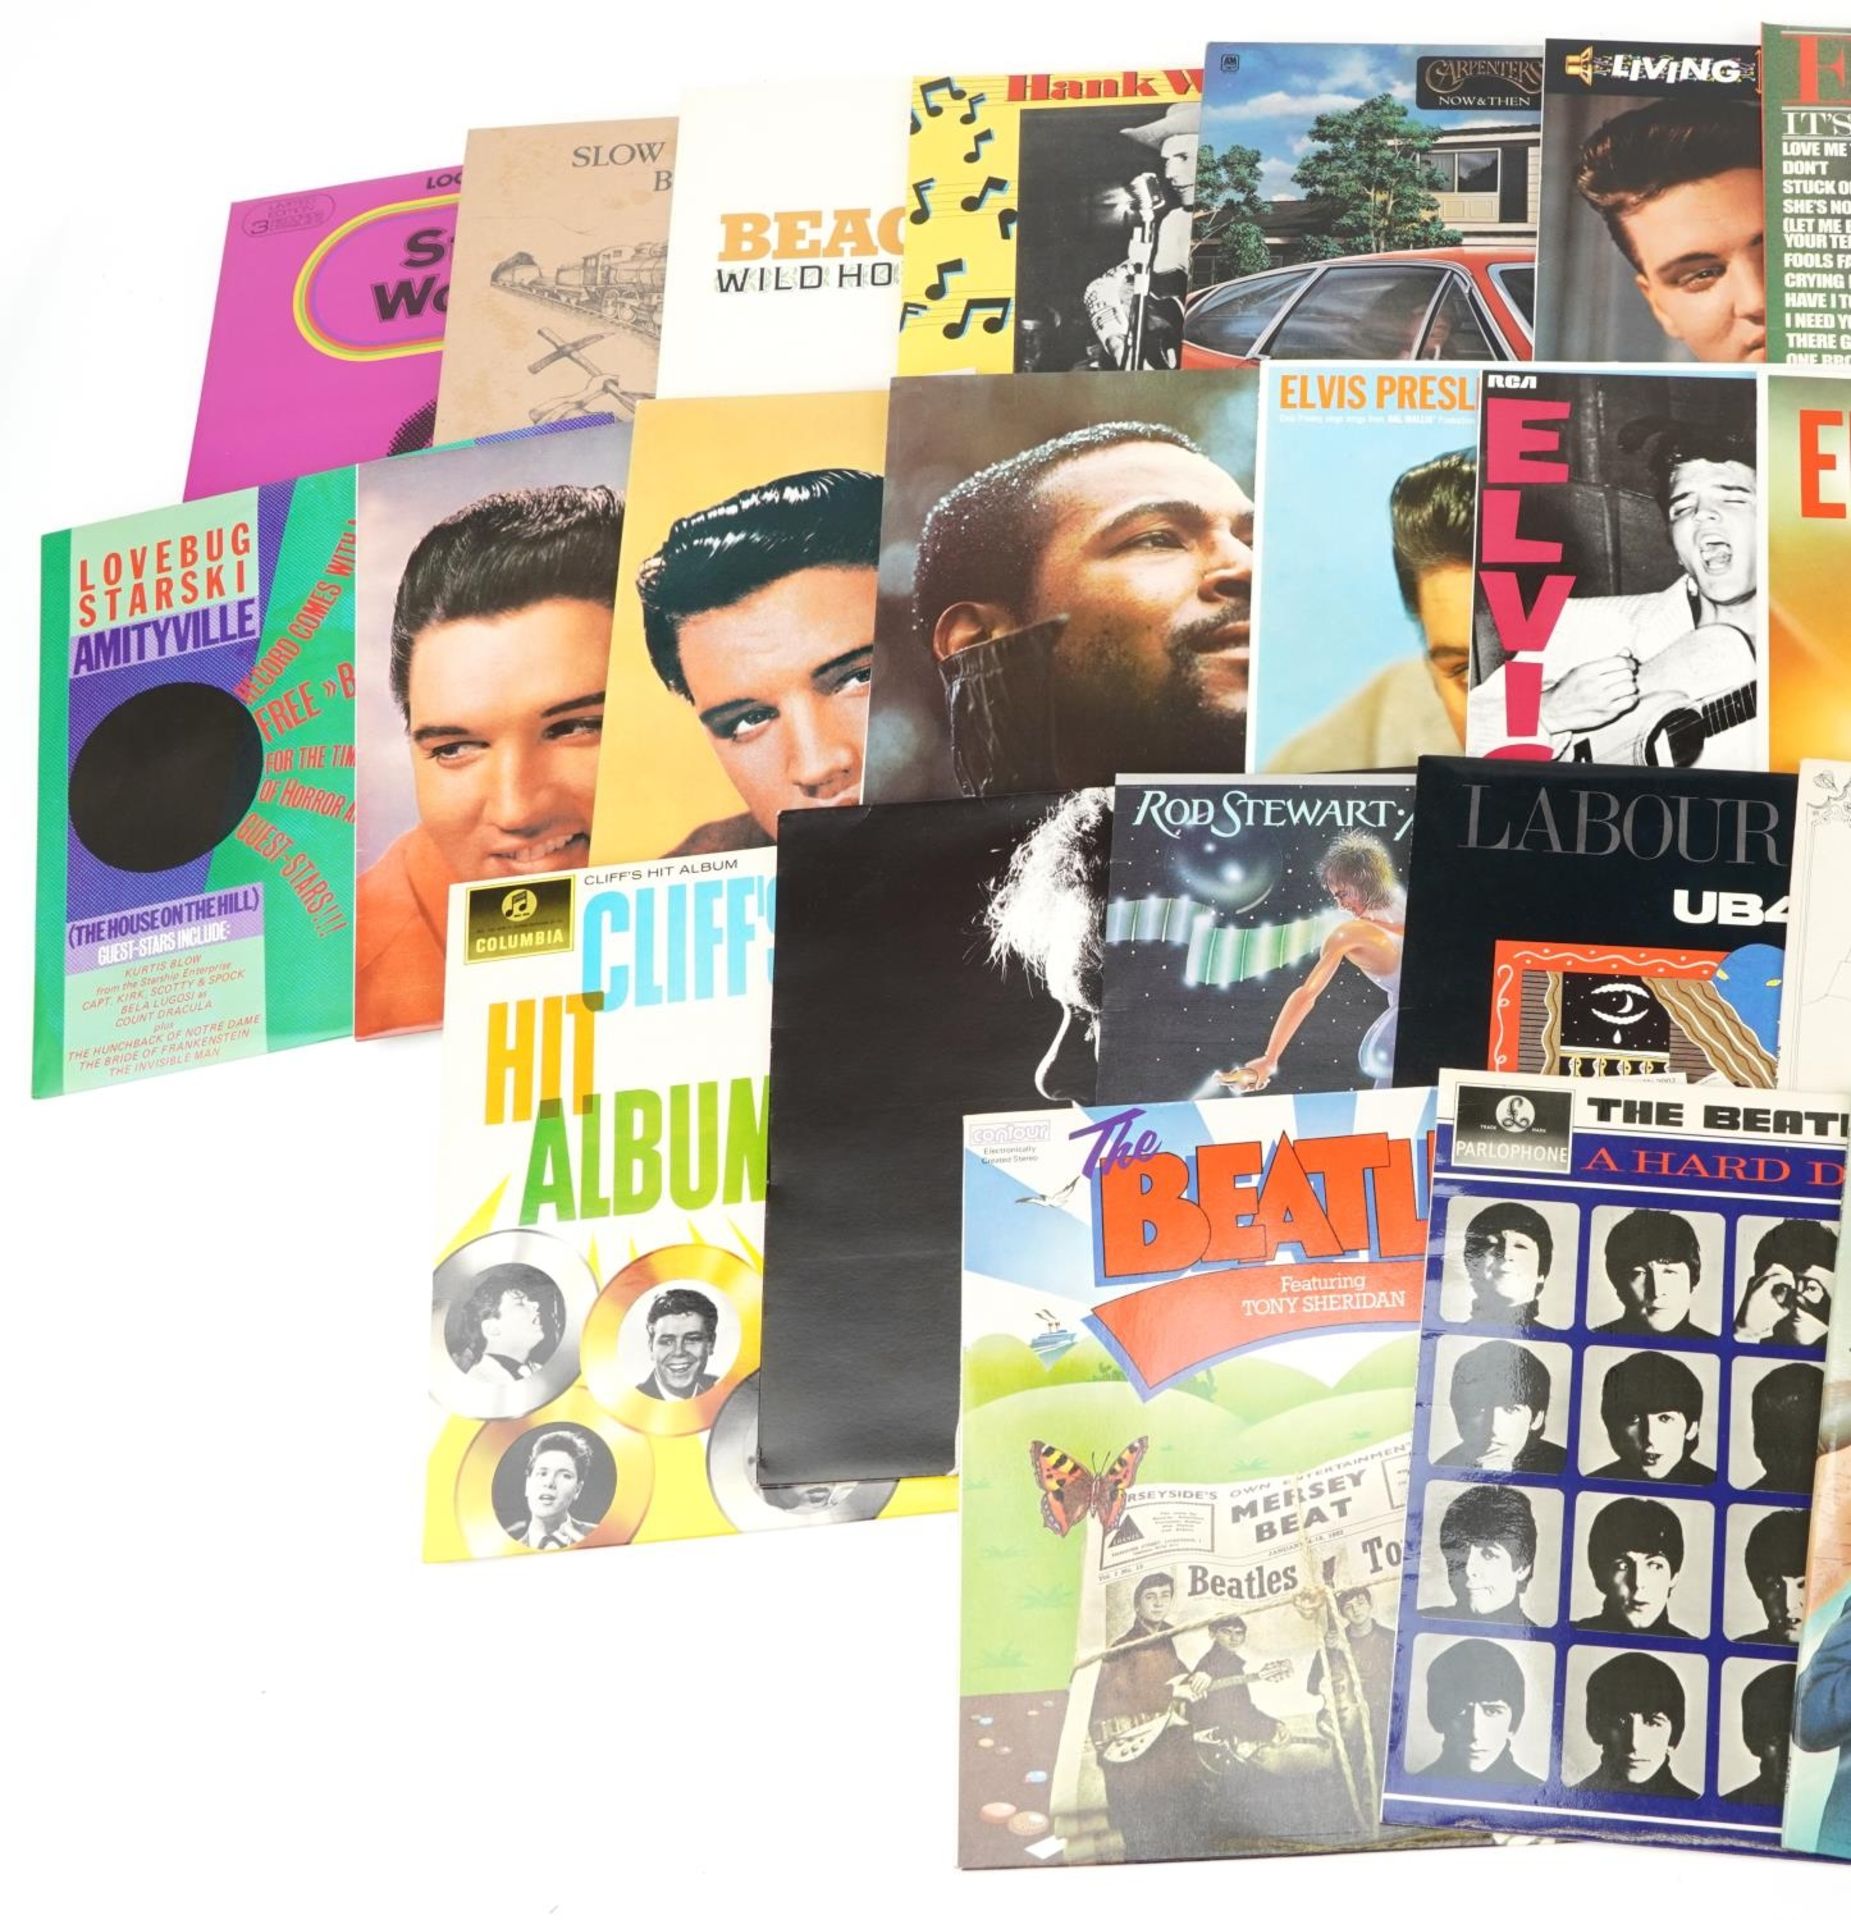 Vinyl LP records including UB40, The Beatles, Cliff Richard, Rod Stewart, Elvis Presley, The - Image 2 of 3